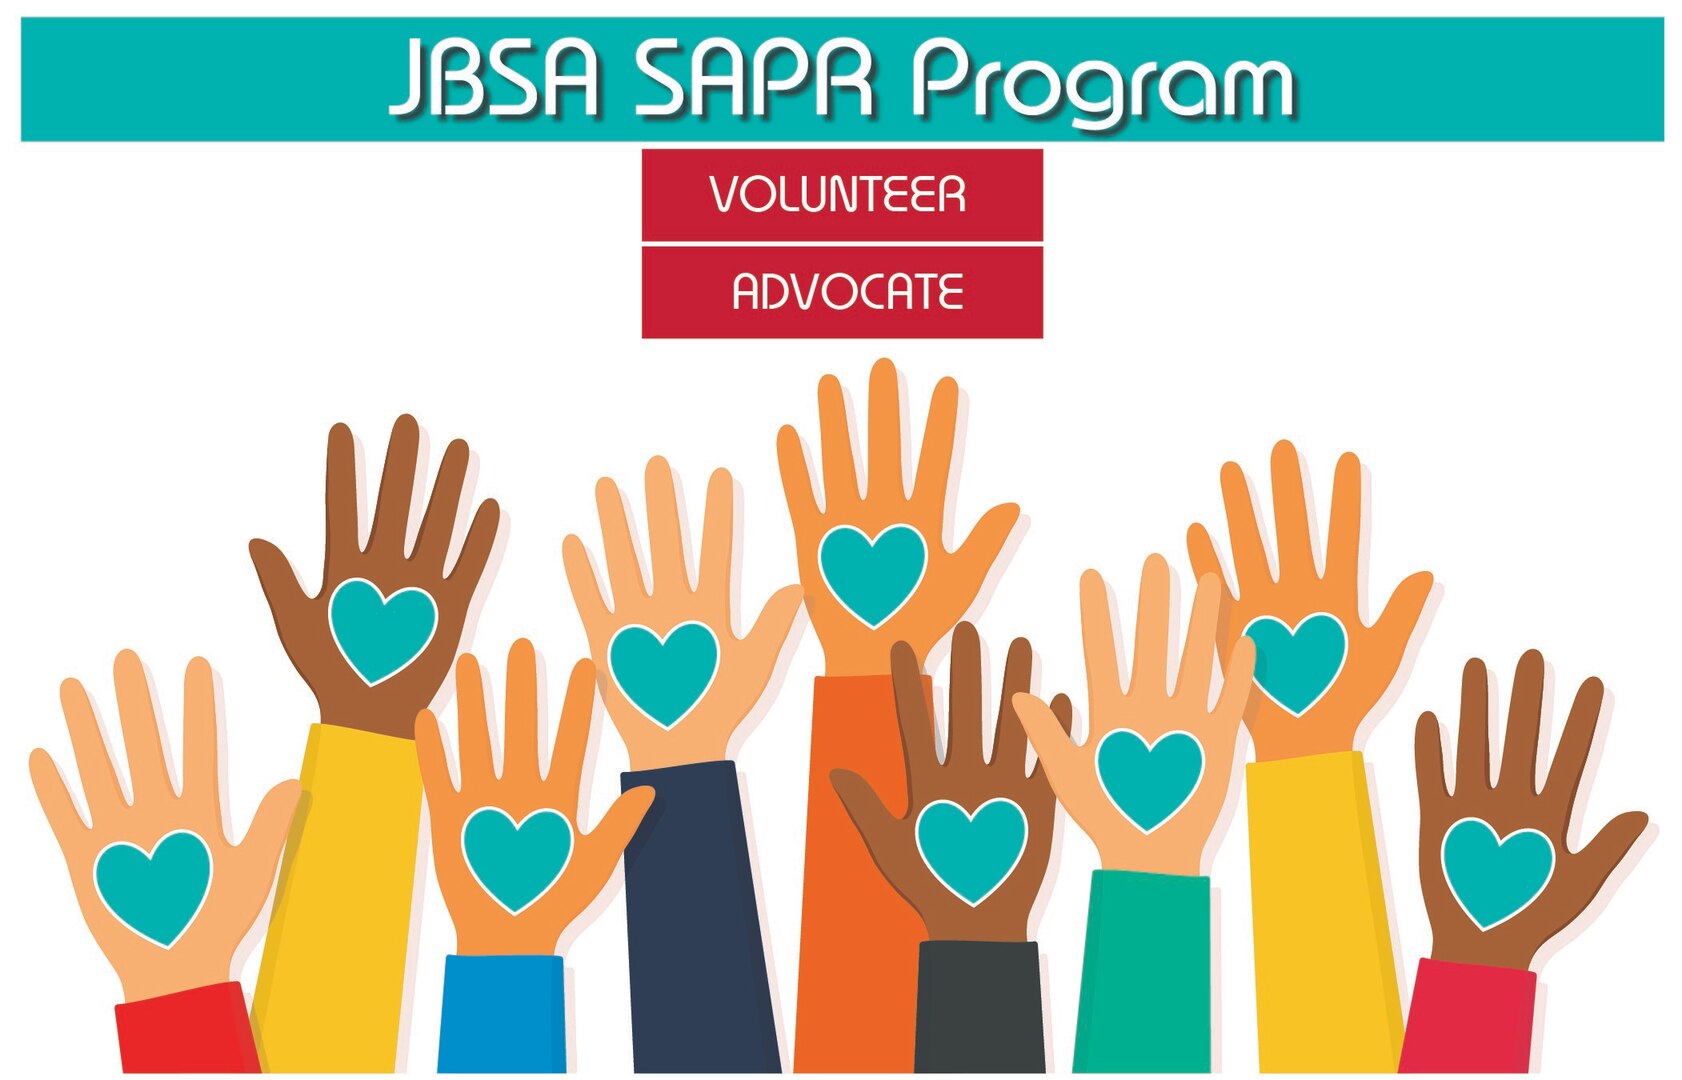 JBSA SAPR program logo